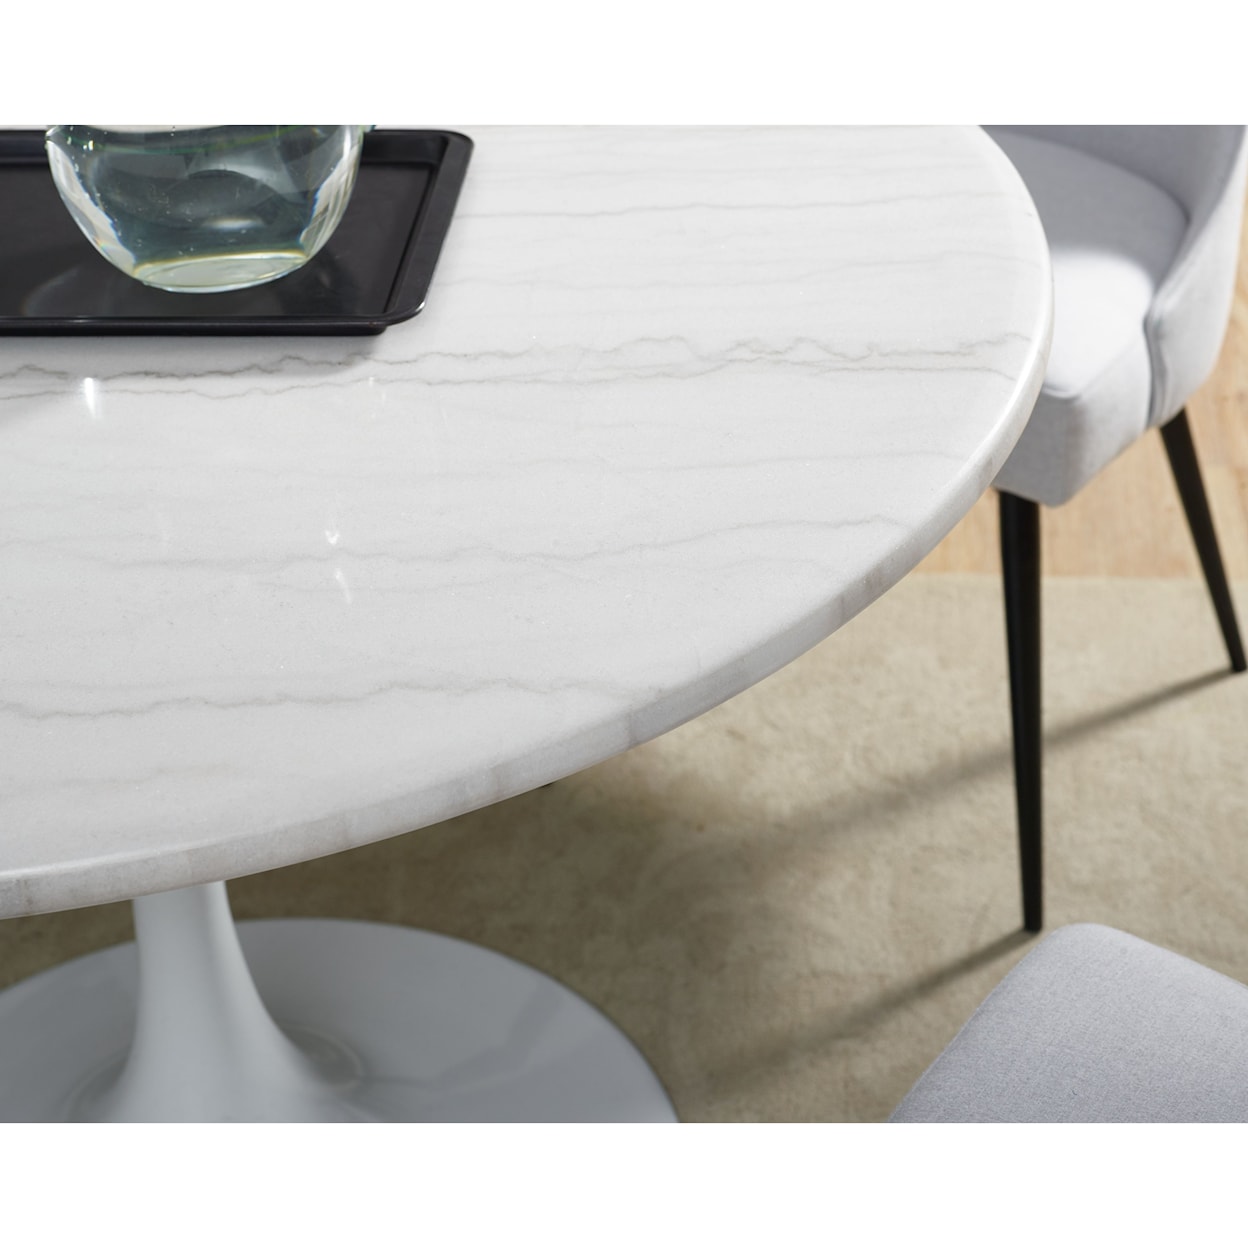 Steve Silver Colfax Table - White Top & Black Base